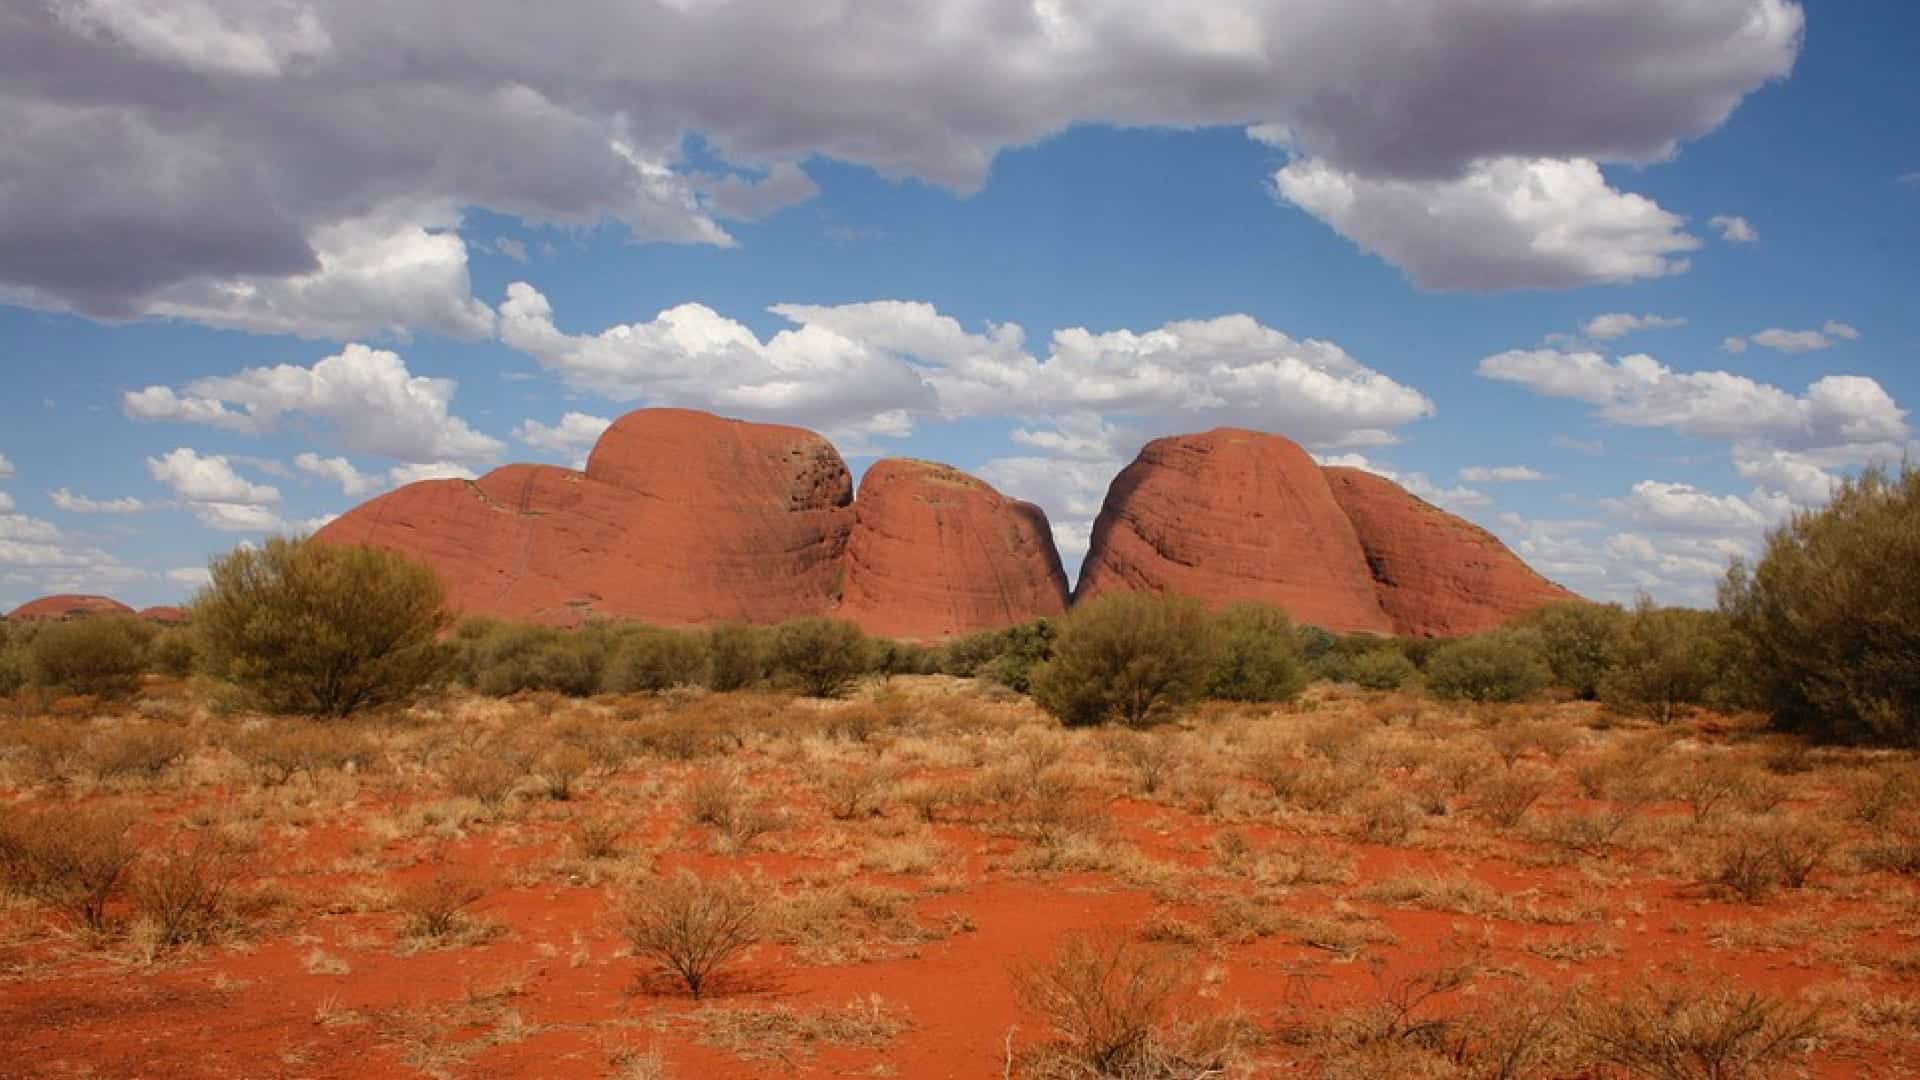 Visit Australia for: The massifs of Kata Tjuta in the Outback